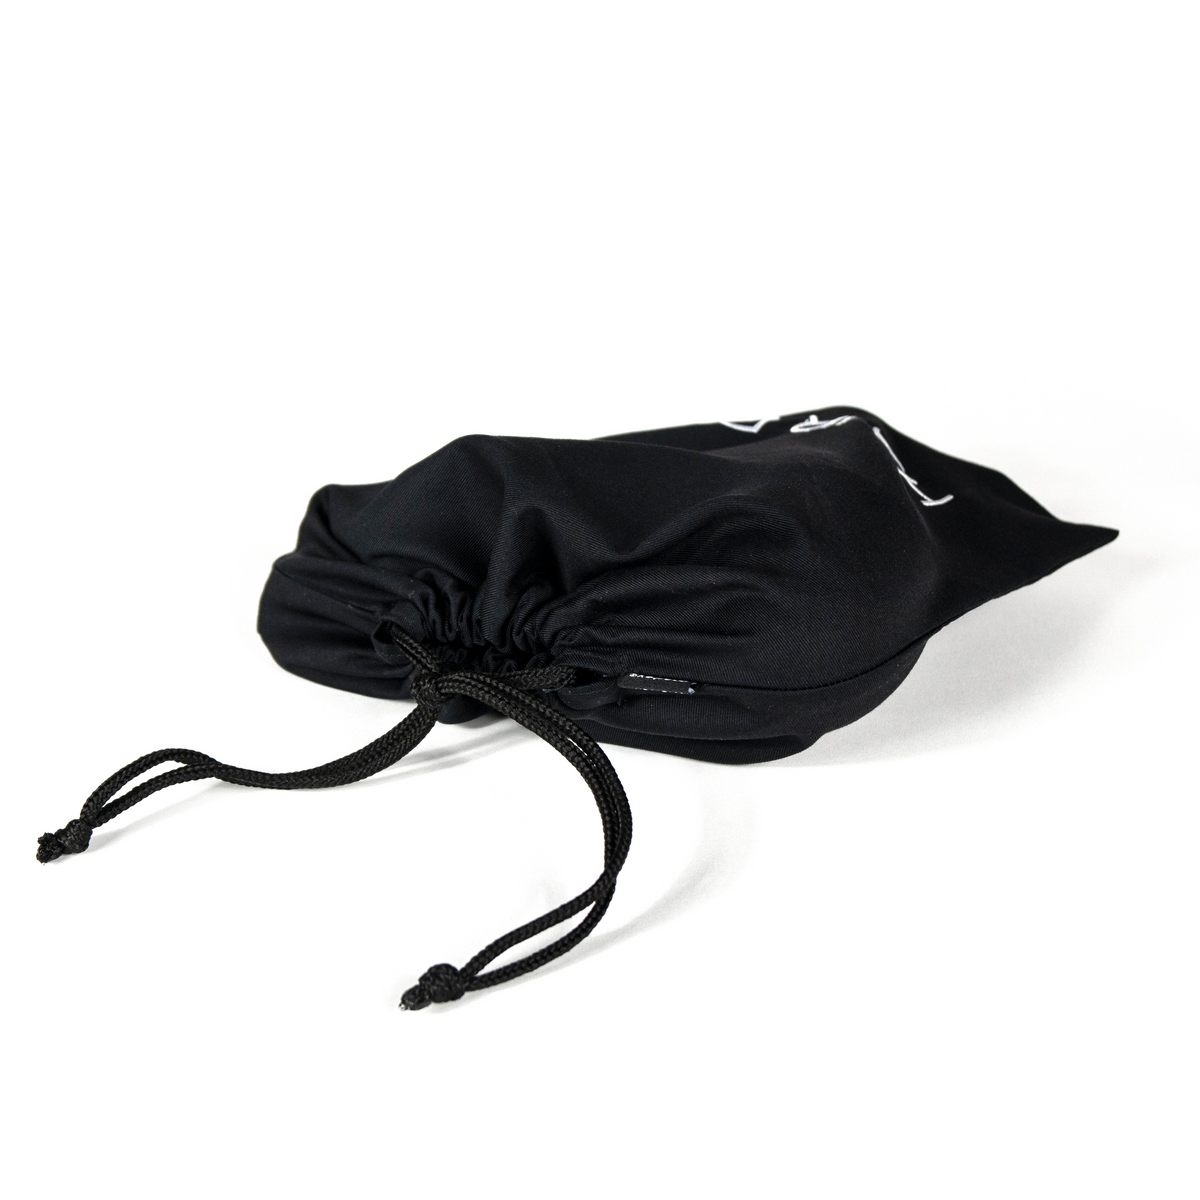 Martex Basics - Hair Dryer Bag